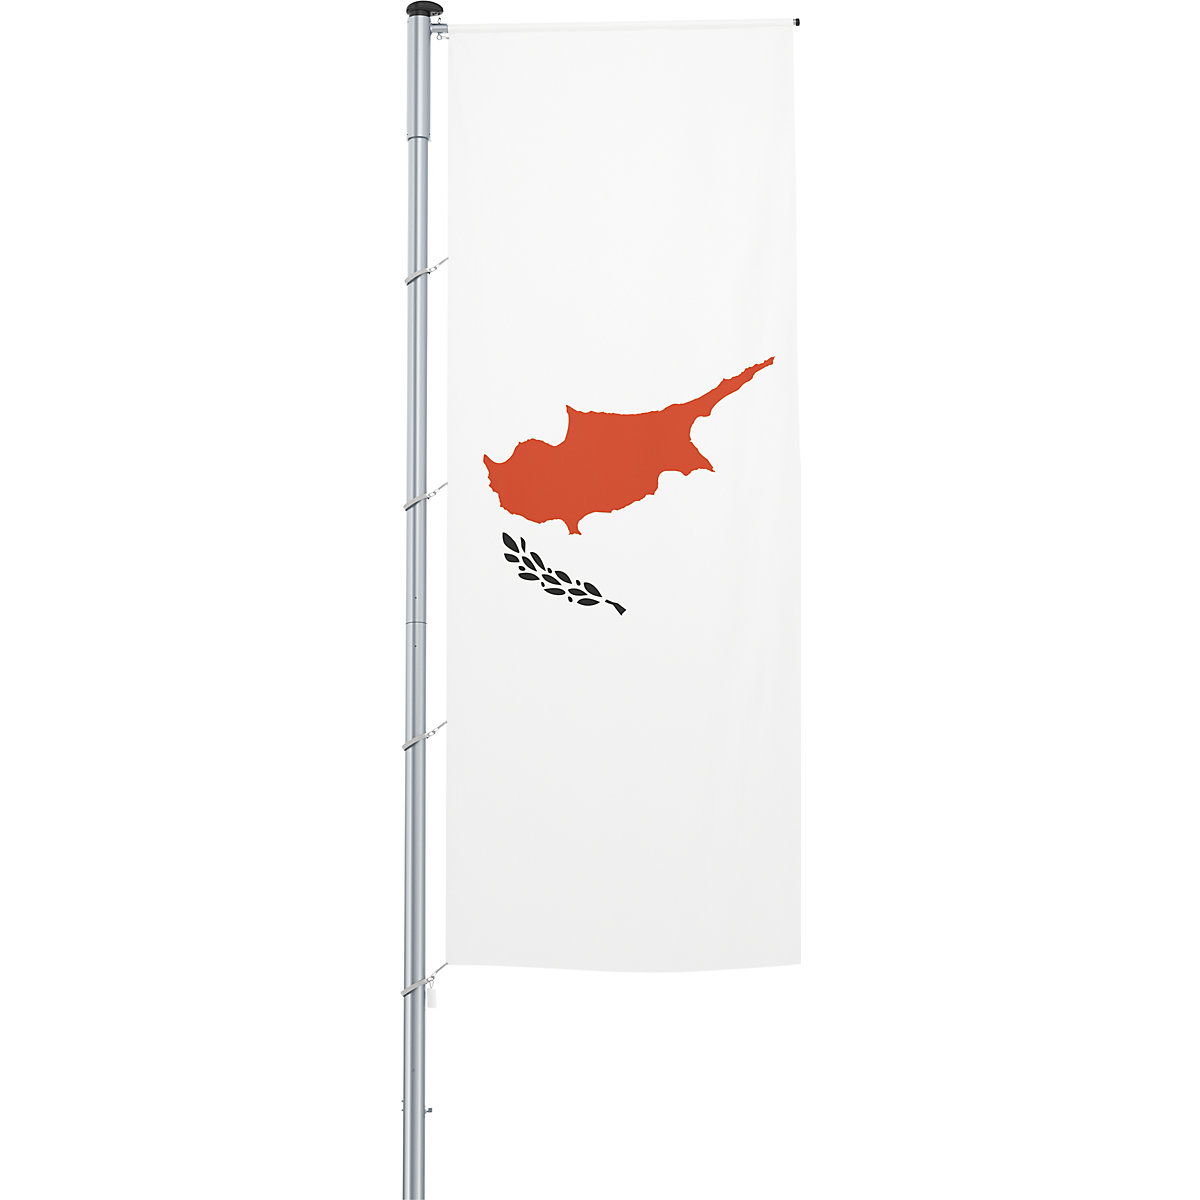 Mastvlag/landvlag – Mannus, formaat 1,2 x 3 m, Cyprus-16